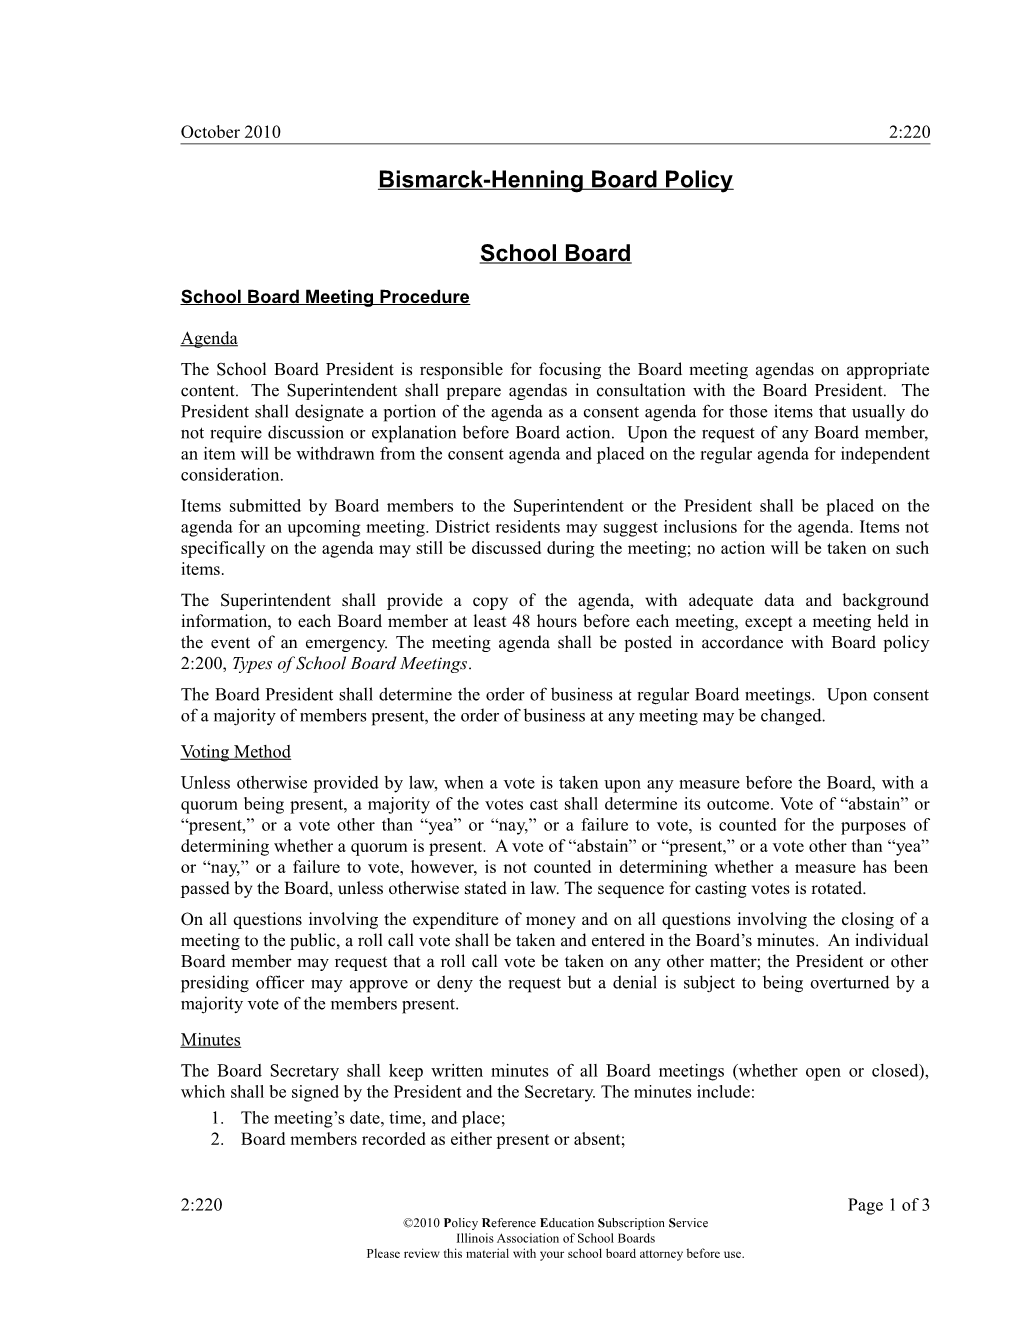 Bismarck-Henning Board Policy s1